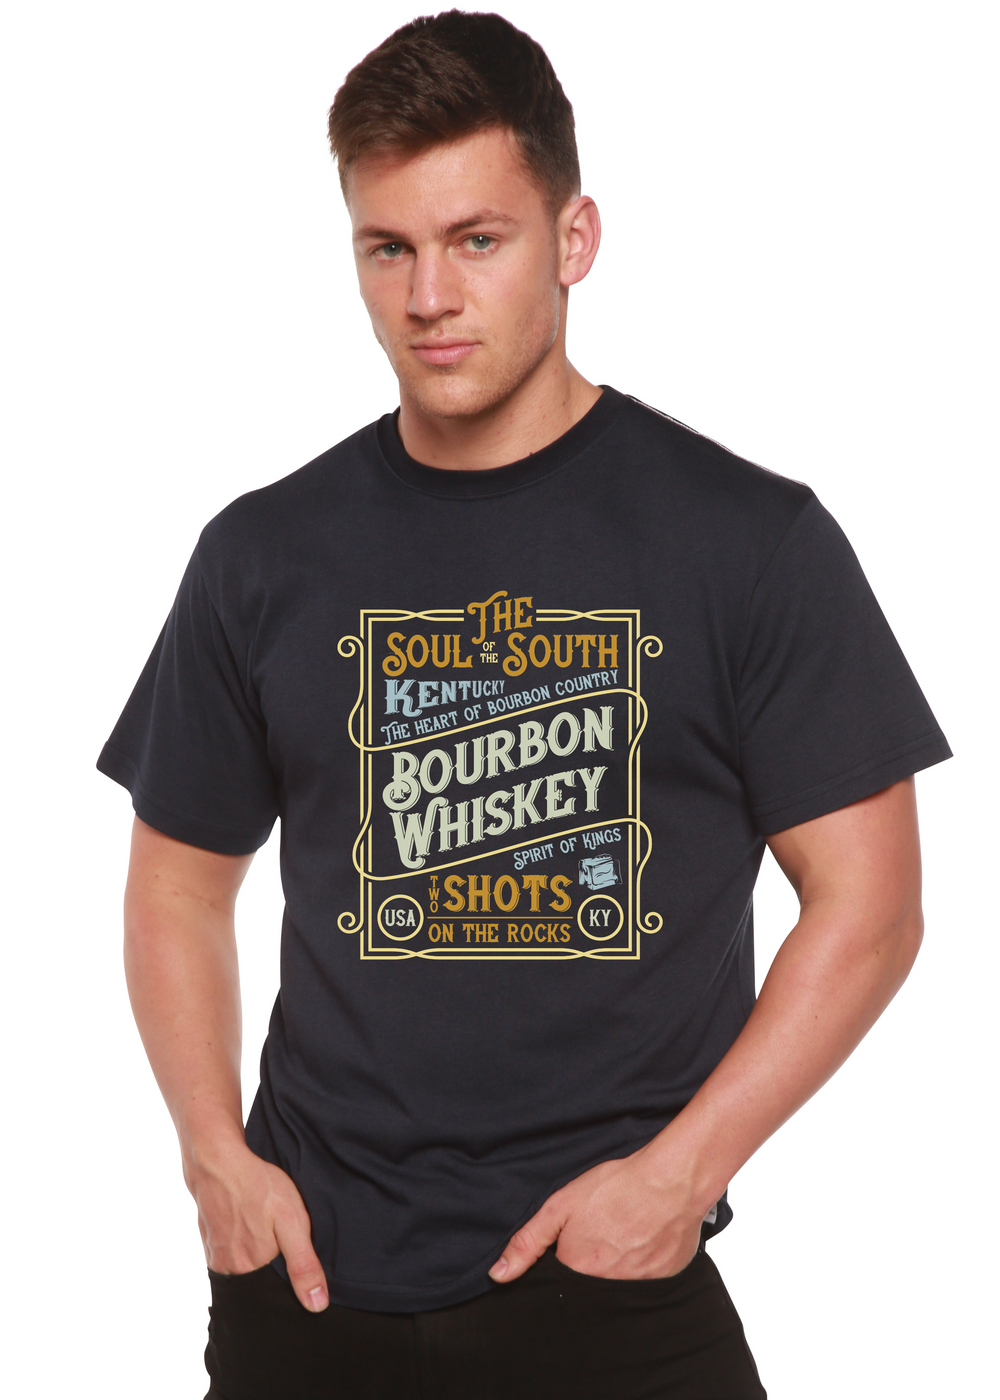 Bourbon Whiskey men's bamboo tshirt navy blue